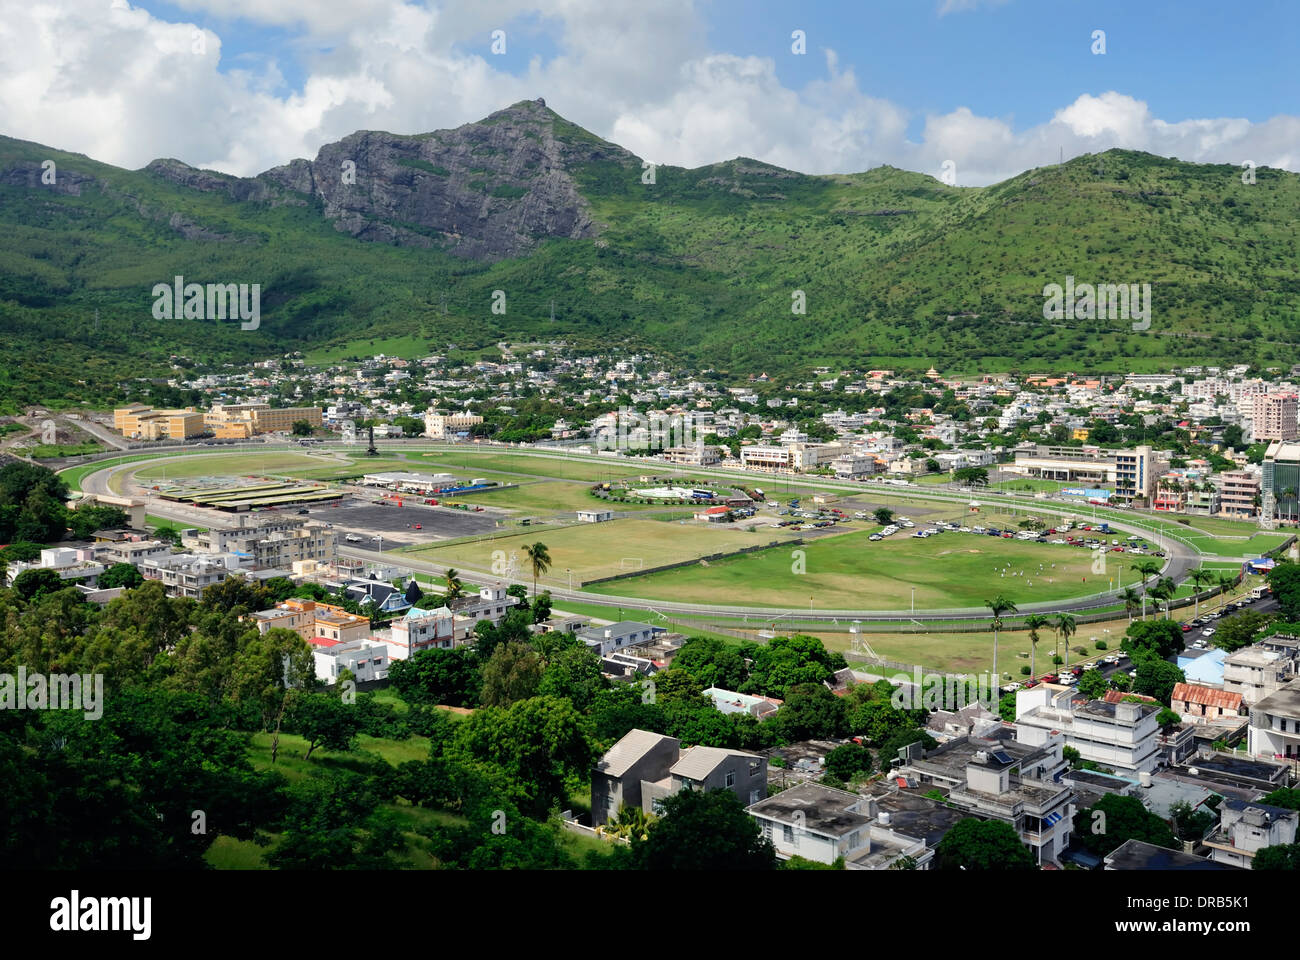 The Champ de Mars Racecourse in Mauritius Stock Photo